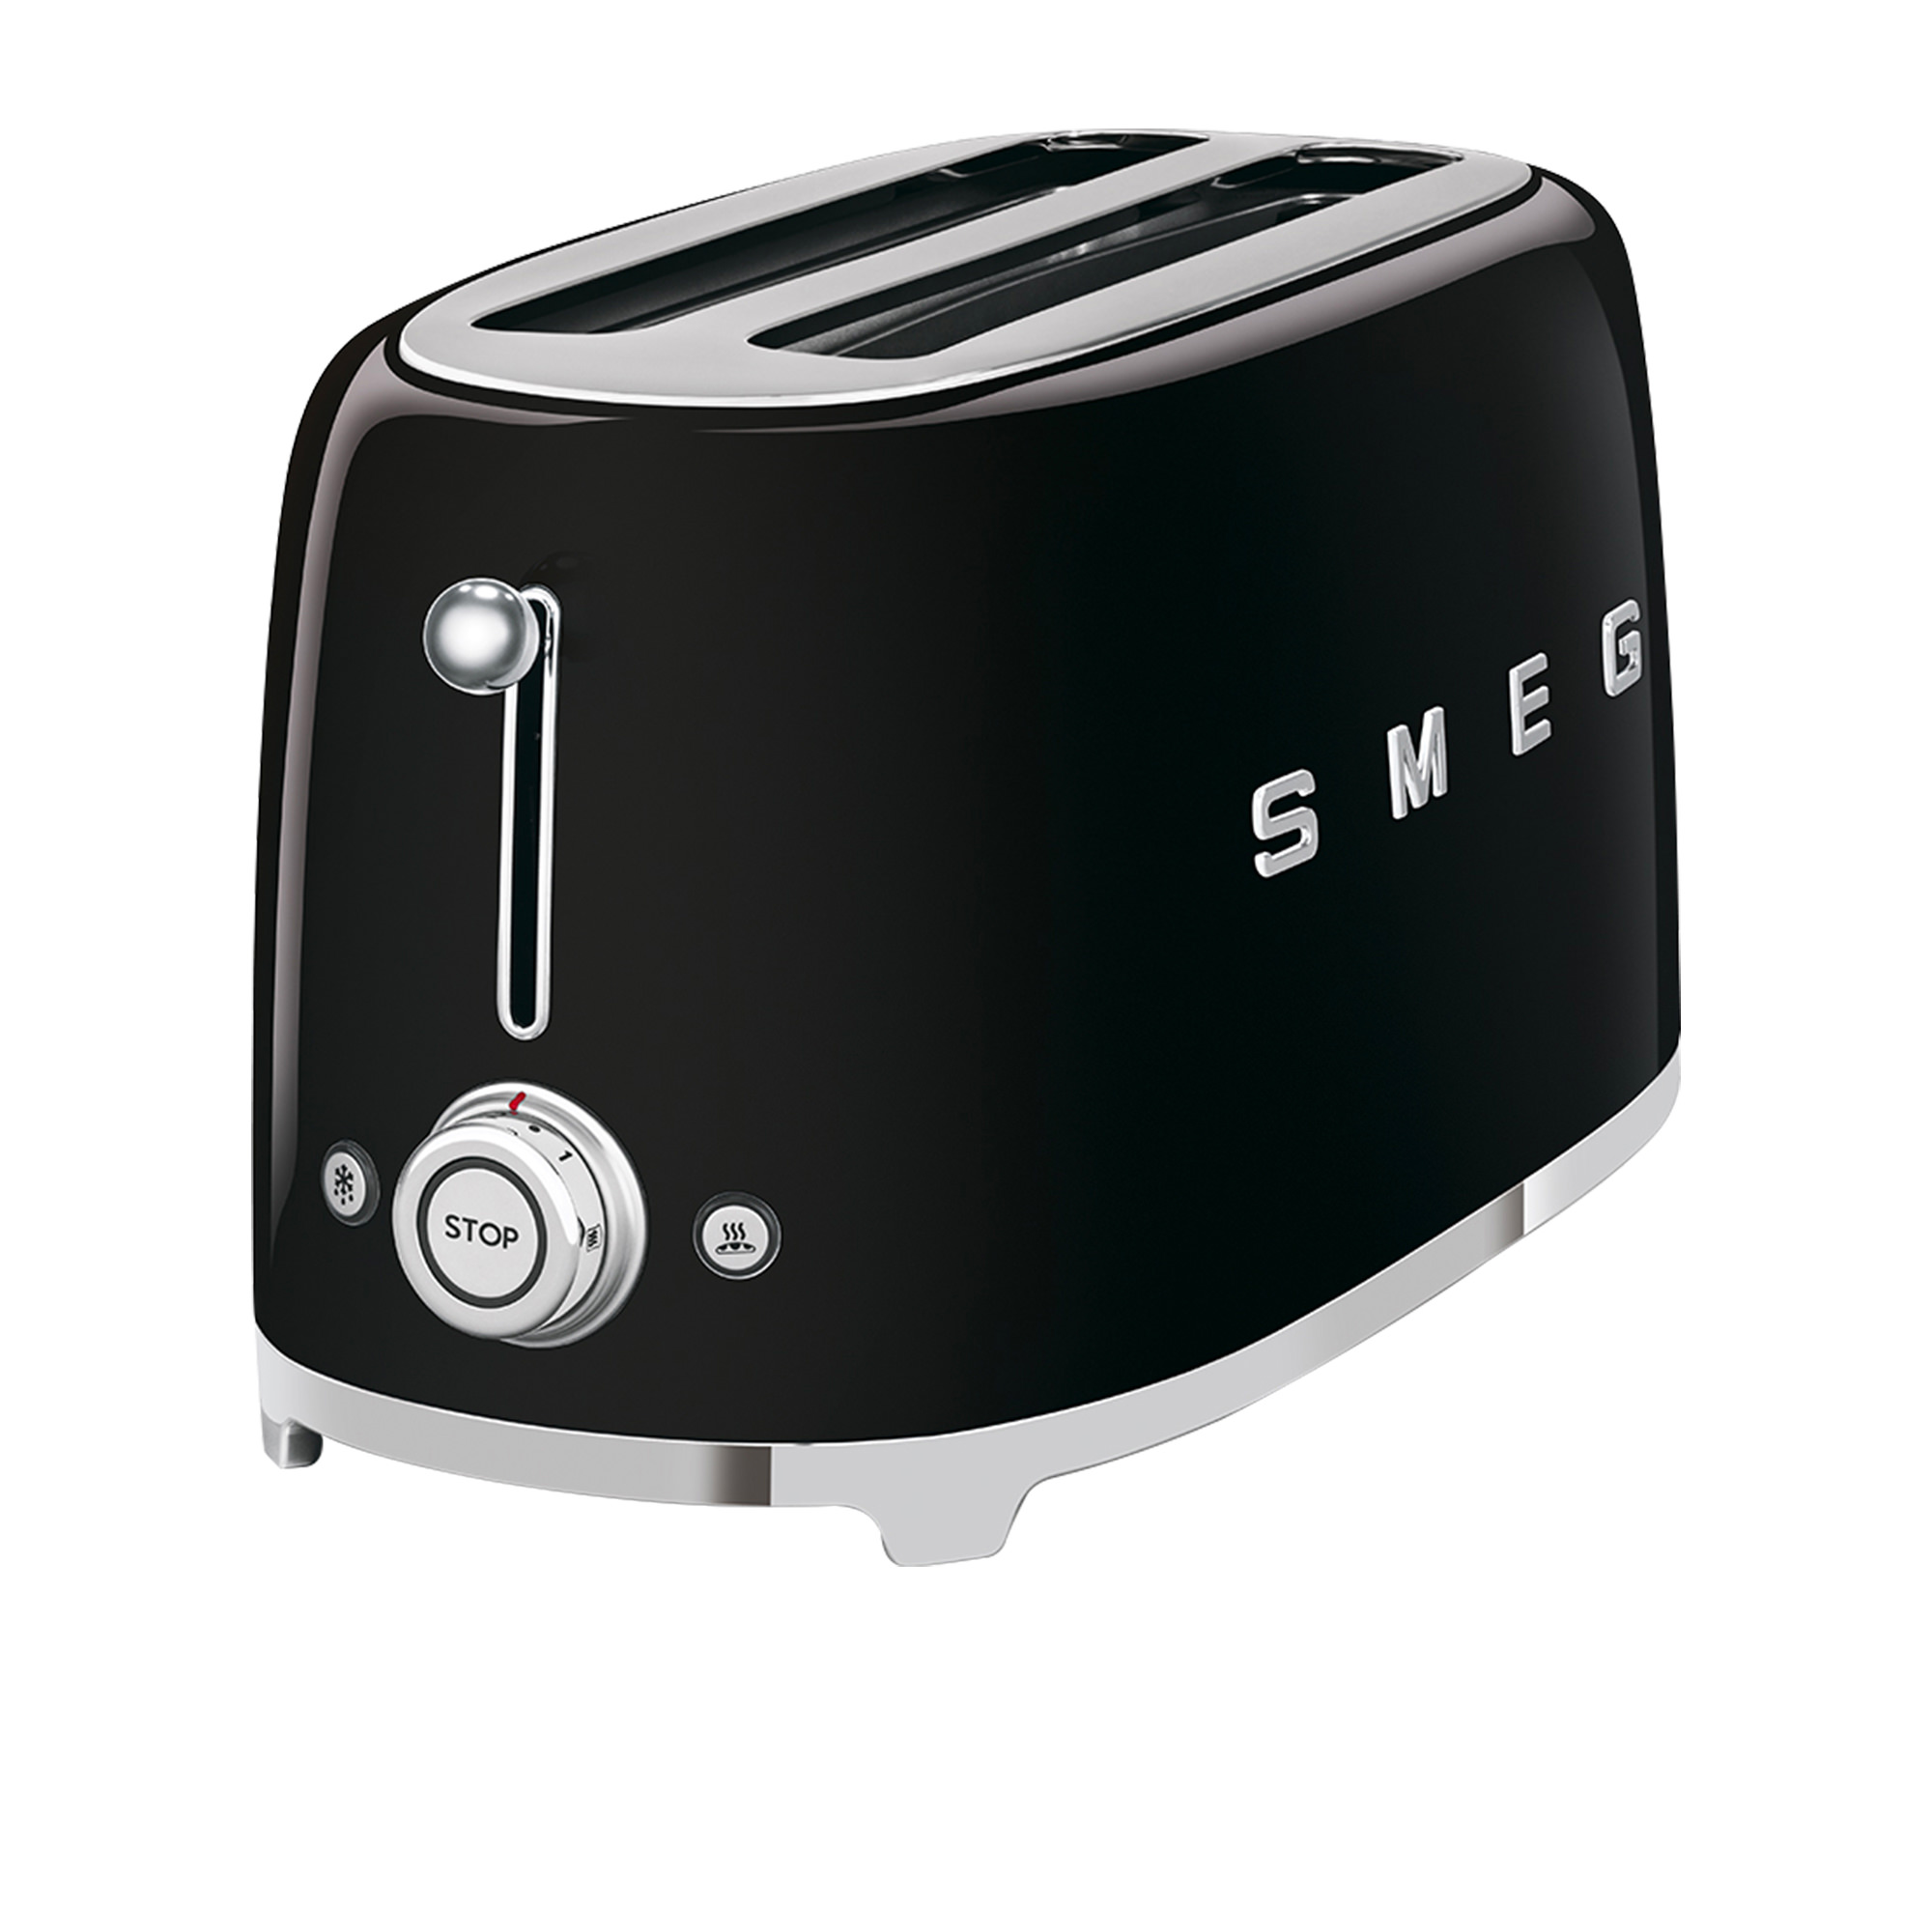 Smeg 50's Retro Style 4 Slice Toaster Black Image 1